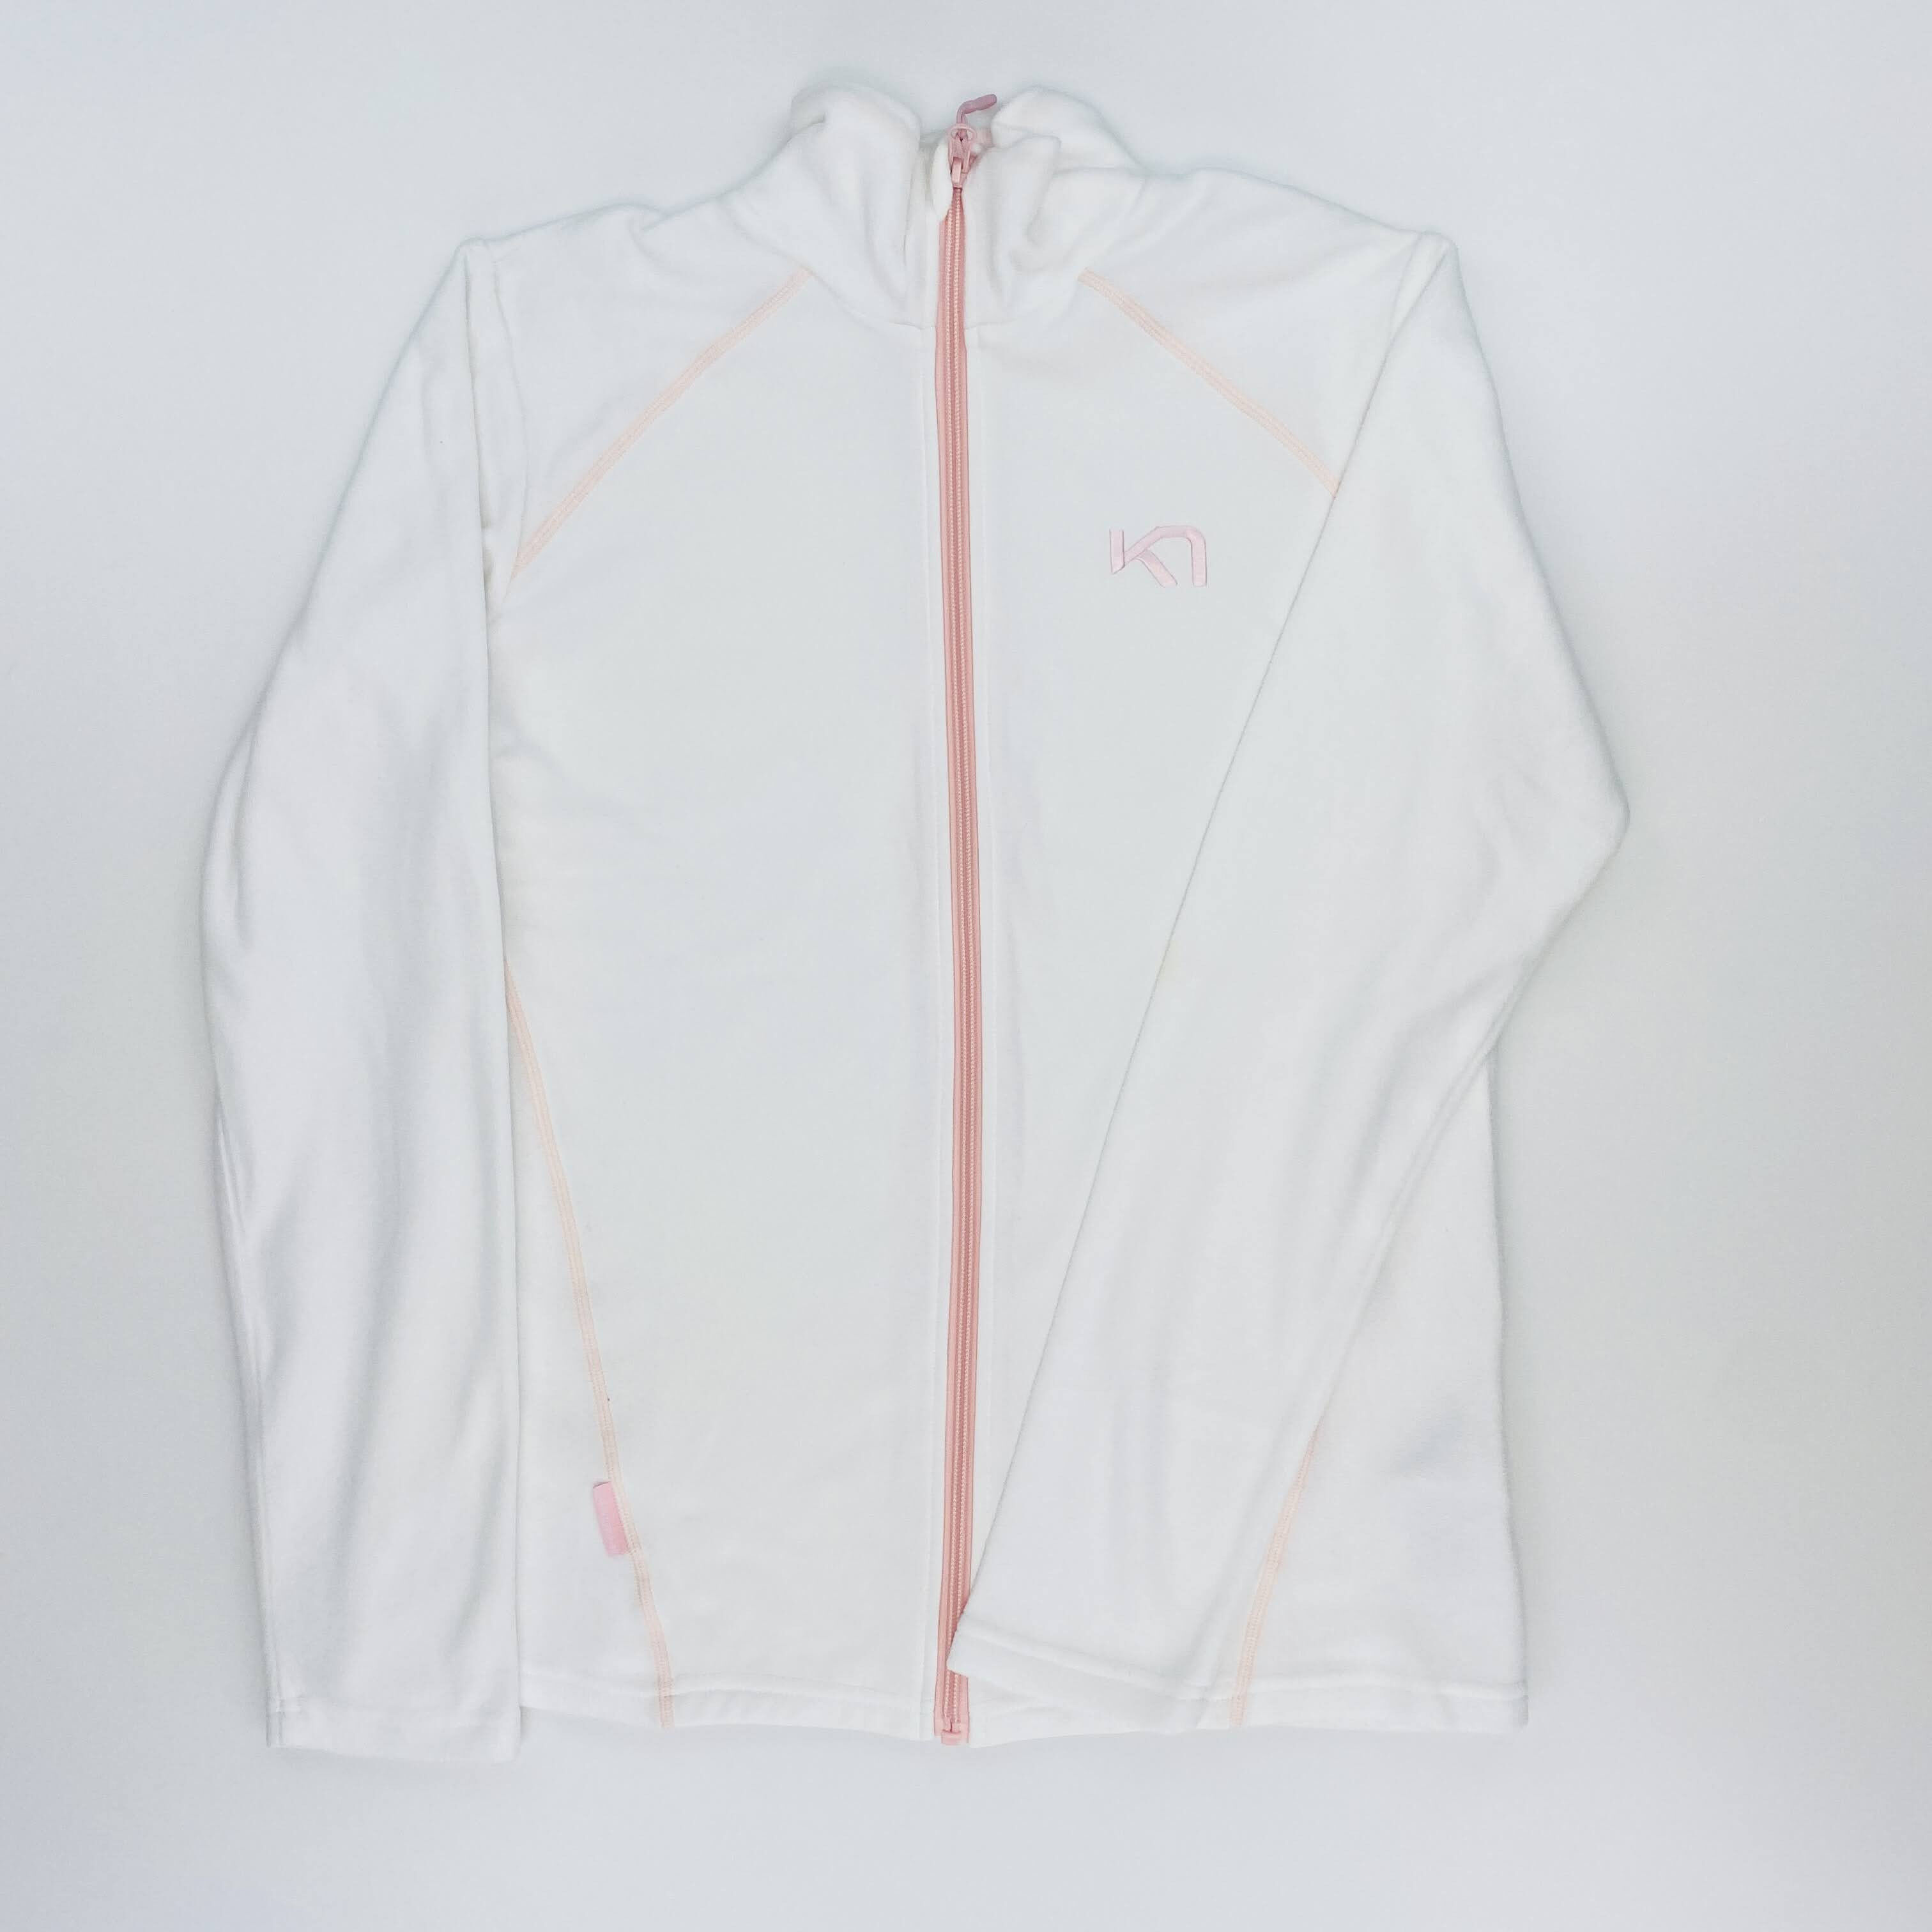 Kari Traa Kari F/Z Fleece - Second Hand Fleece jacket - Women's - White - M | Hardloop